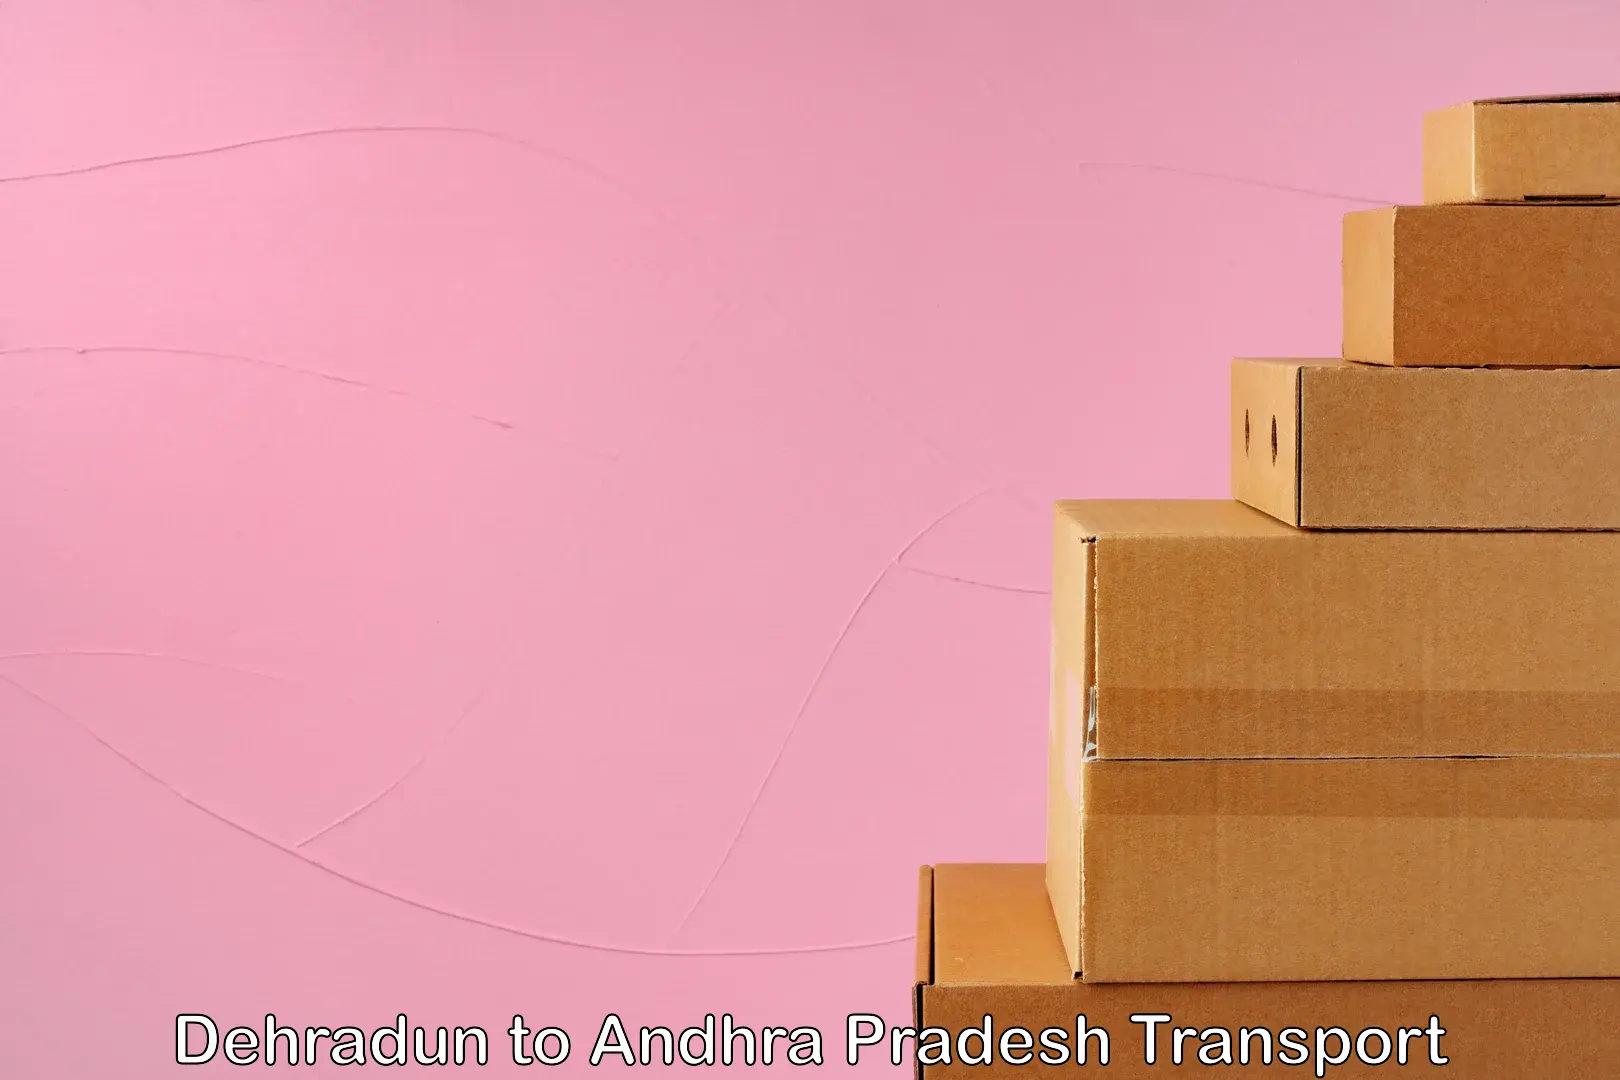 Container transport service Dehradun to Malikipuram